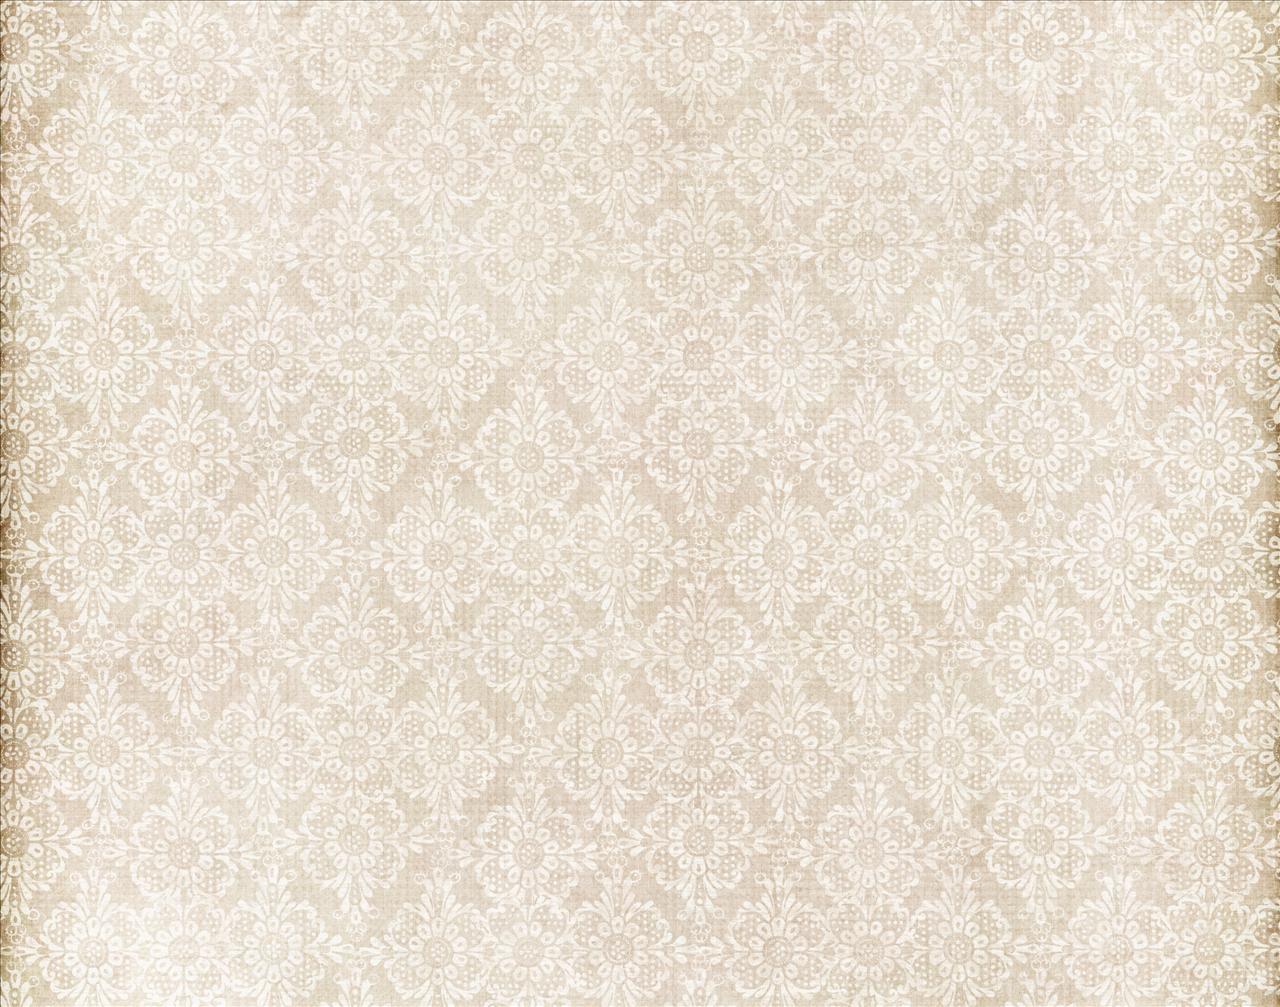 Ivory Lace Background Patterns